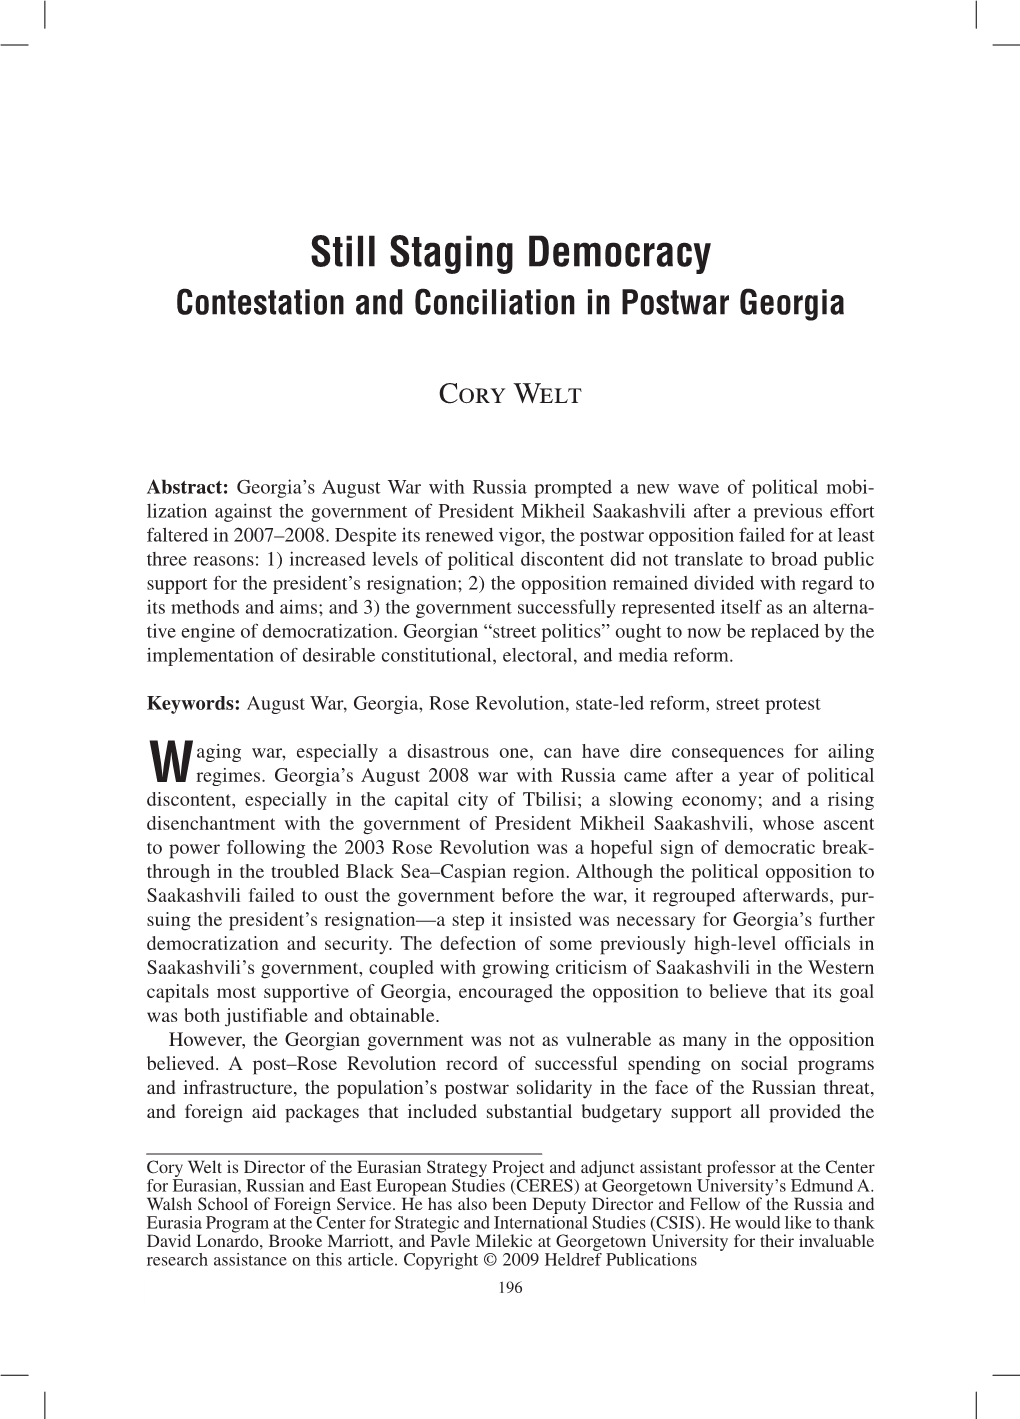 Still Staging Democracy: Contestation and Conciliation in Postwar Georgia 197